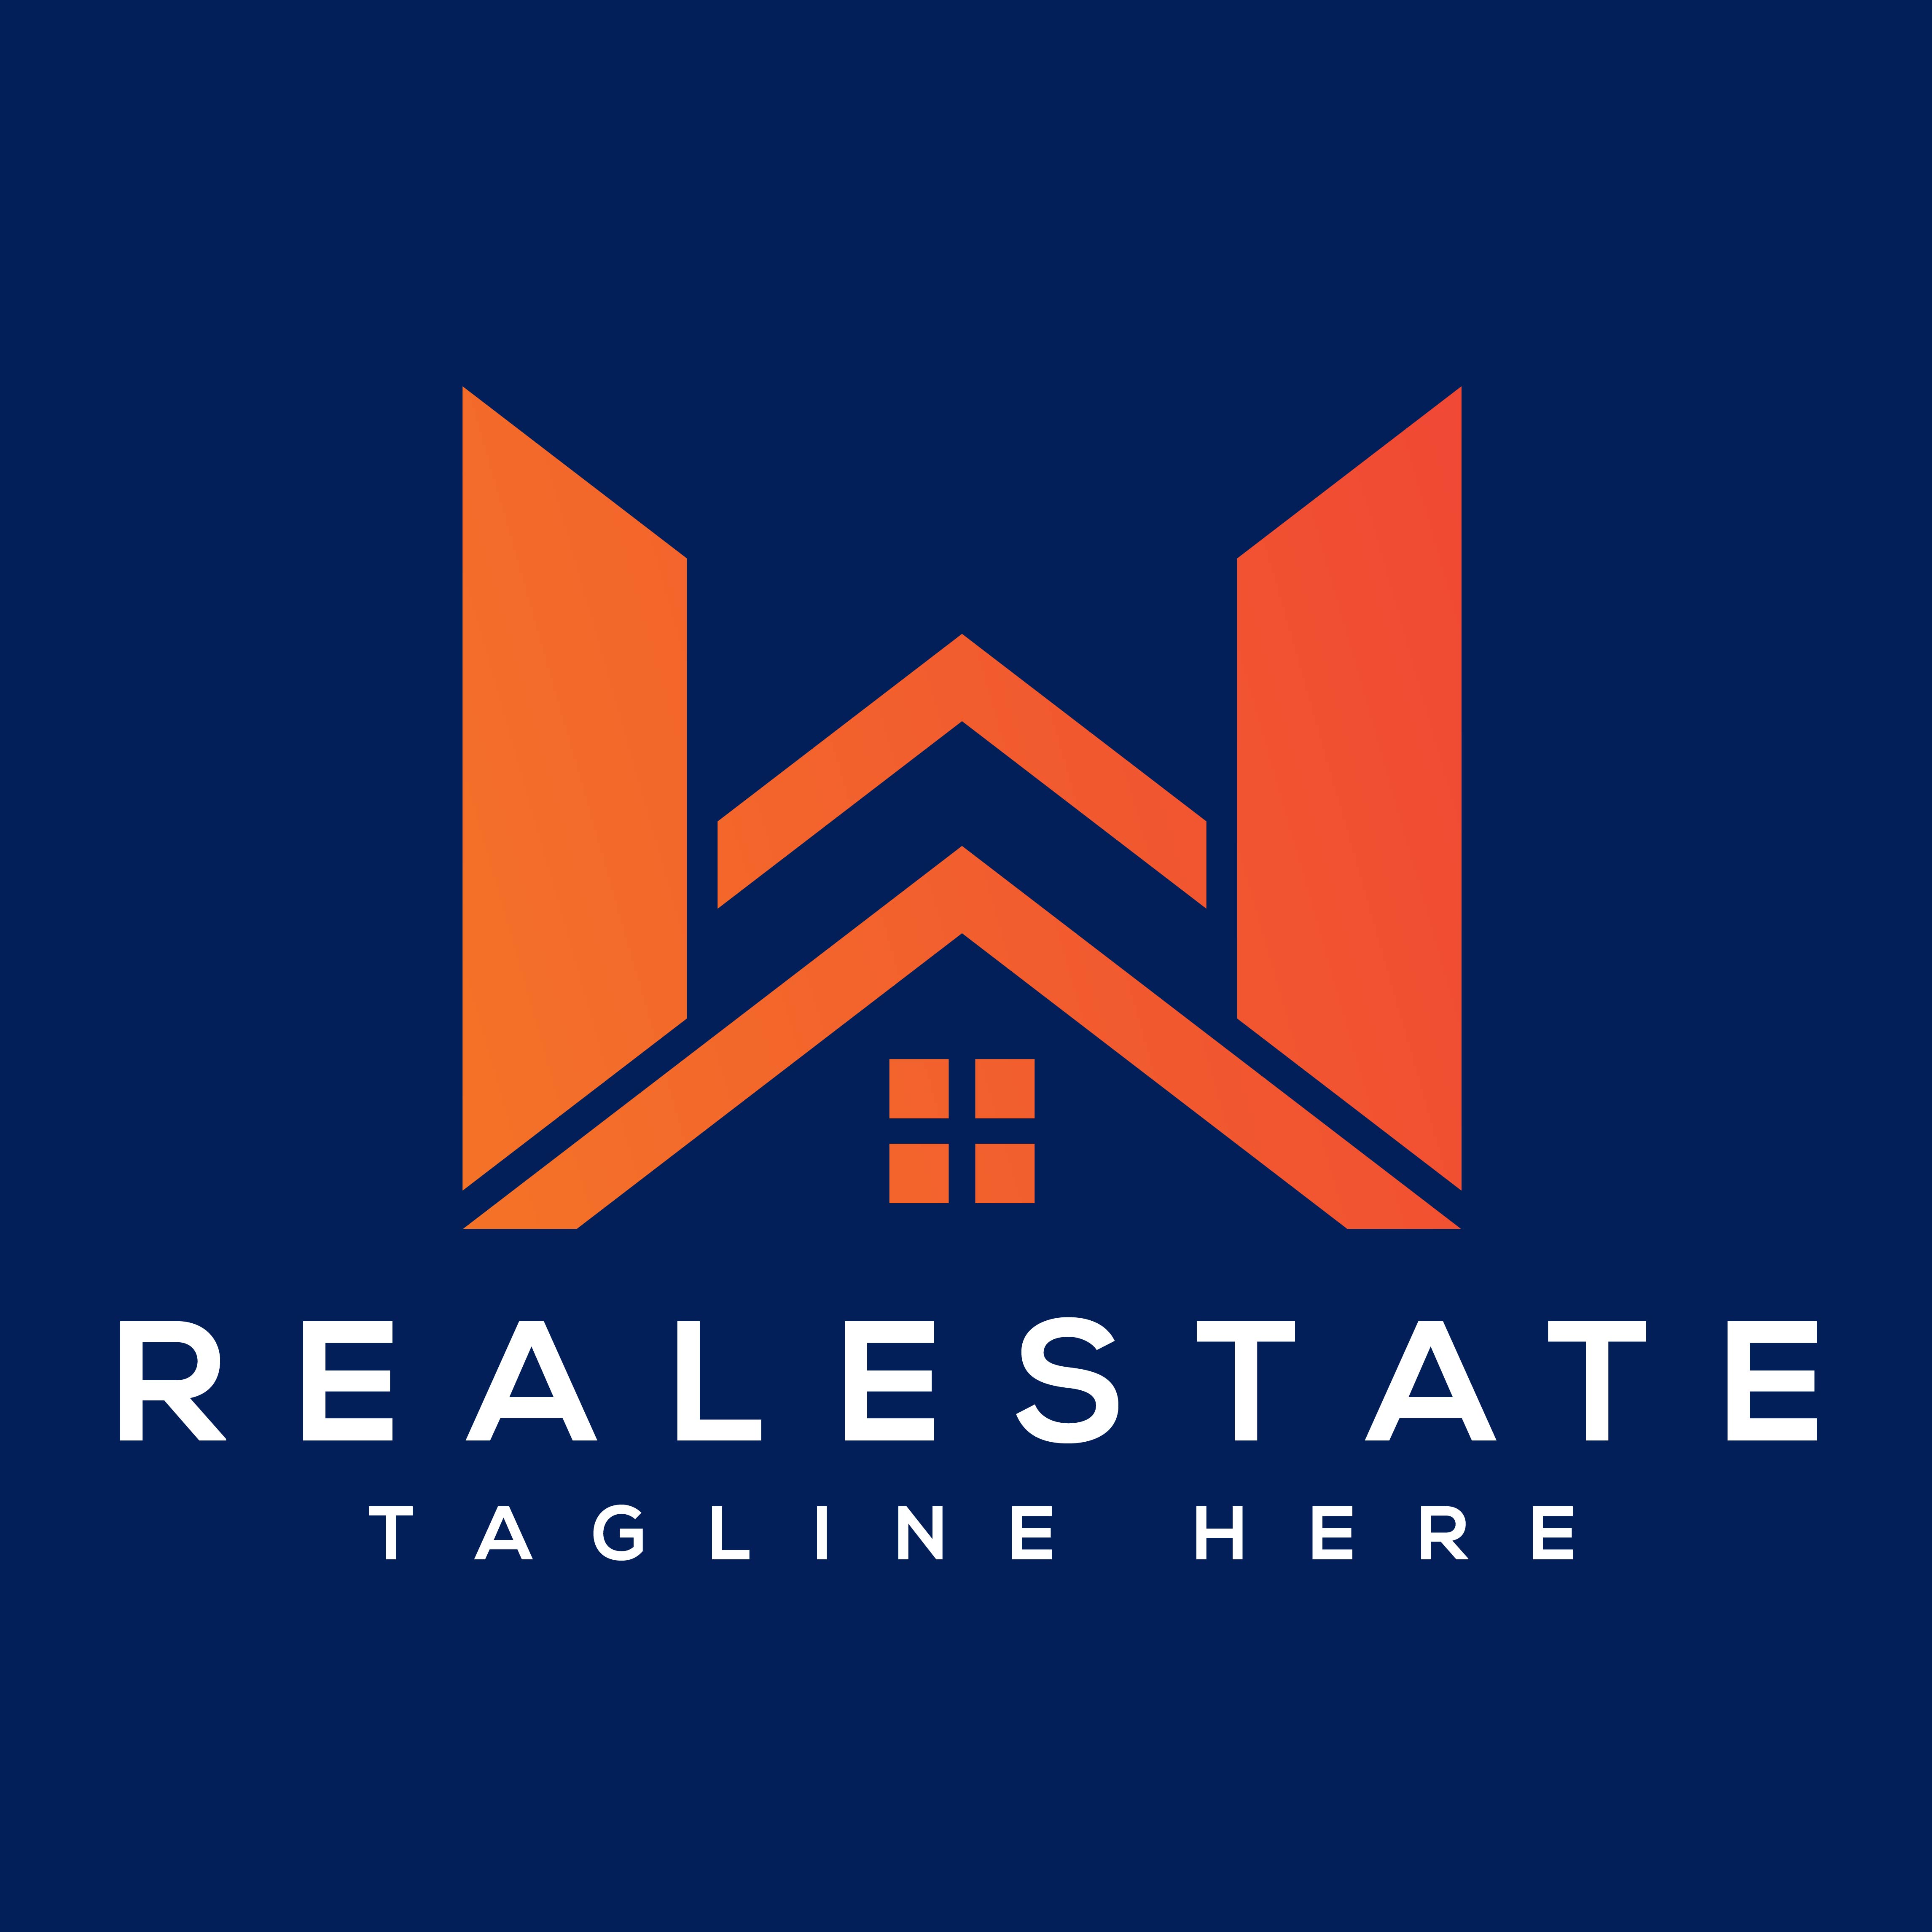 Real Estate Logo Design cover image.